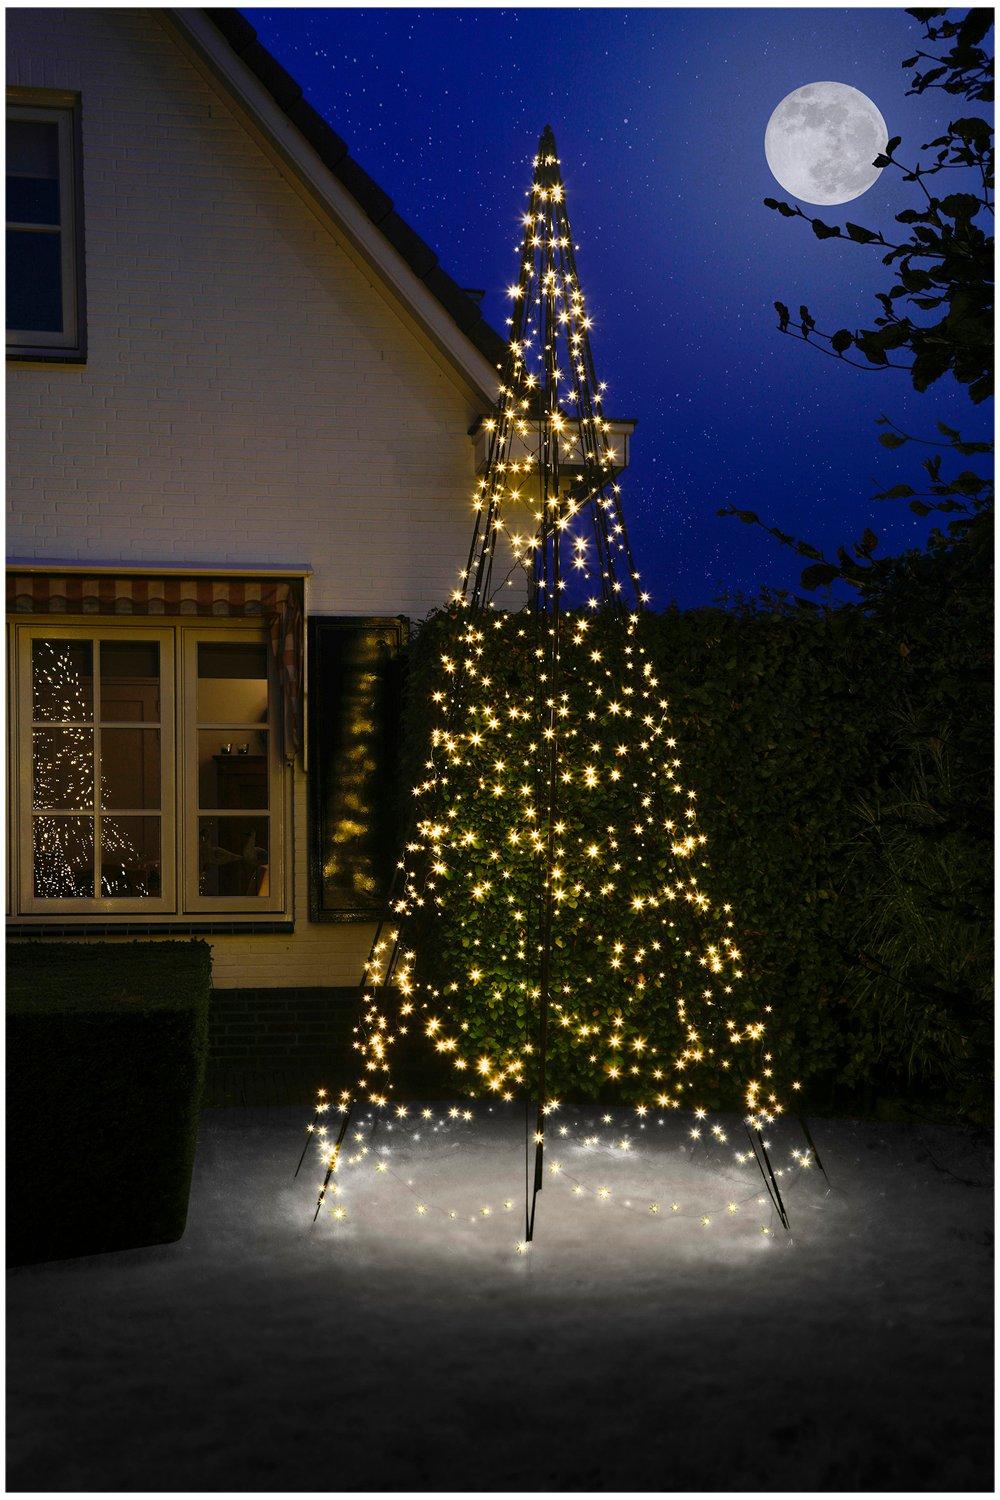 Outdoor Christmas Tree - 4M 640 LED lights create a beautifully illuminated Christmas tree